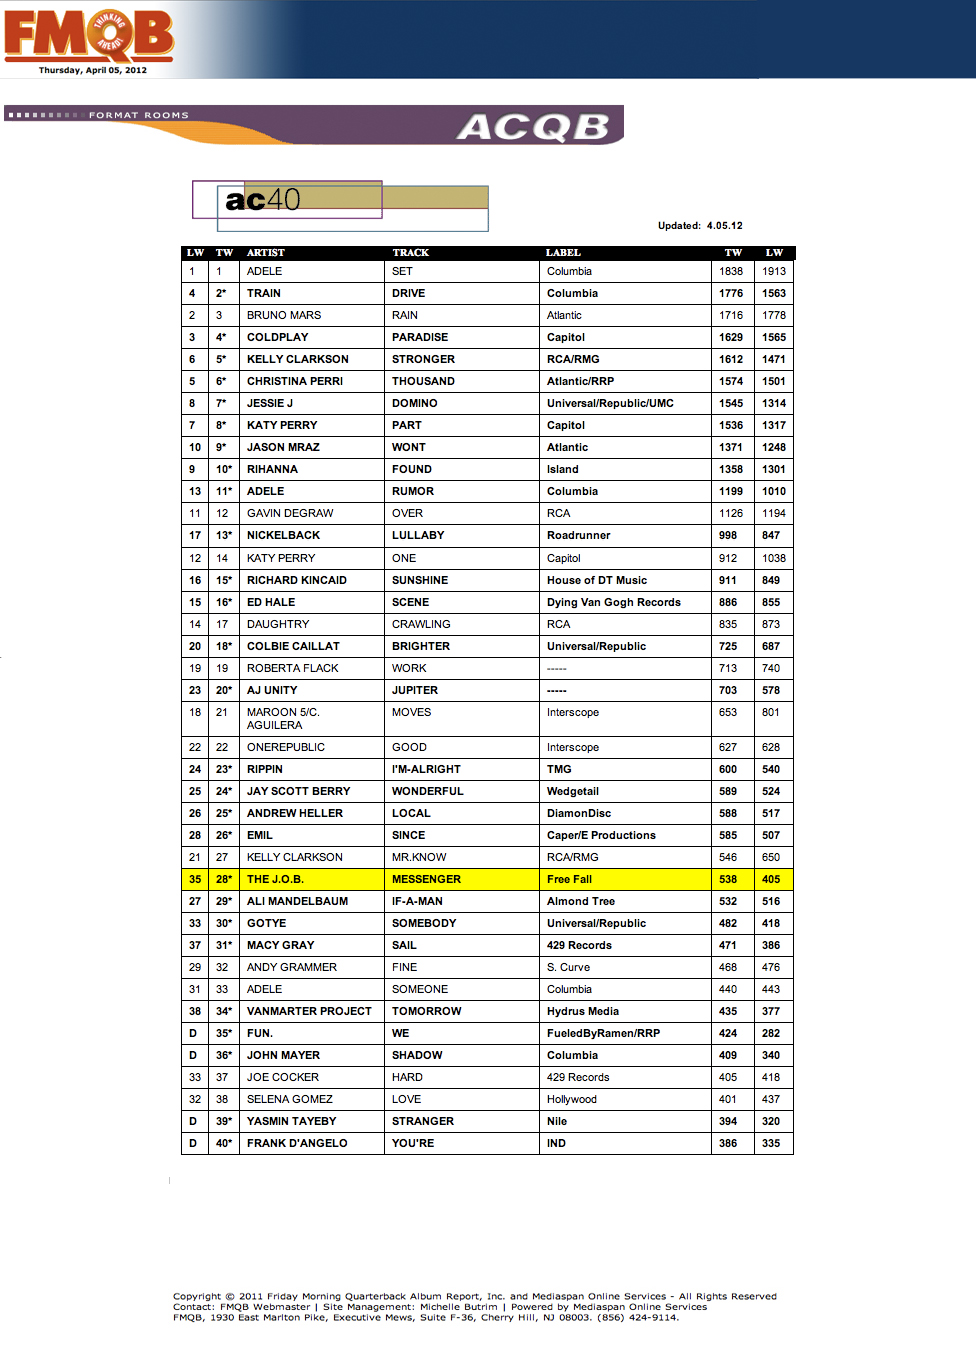 Top 40 Music Charts 2012